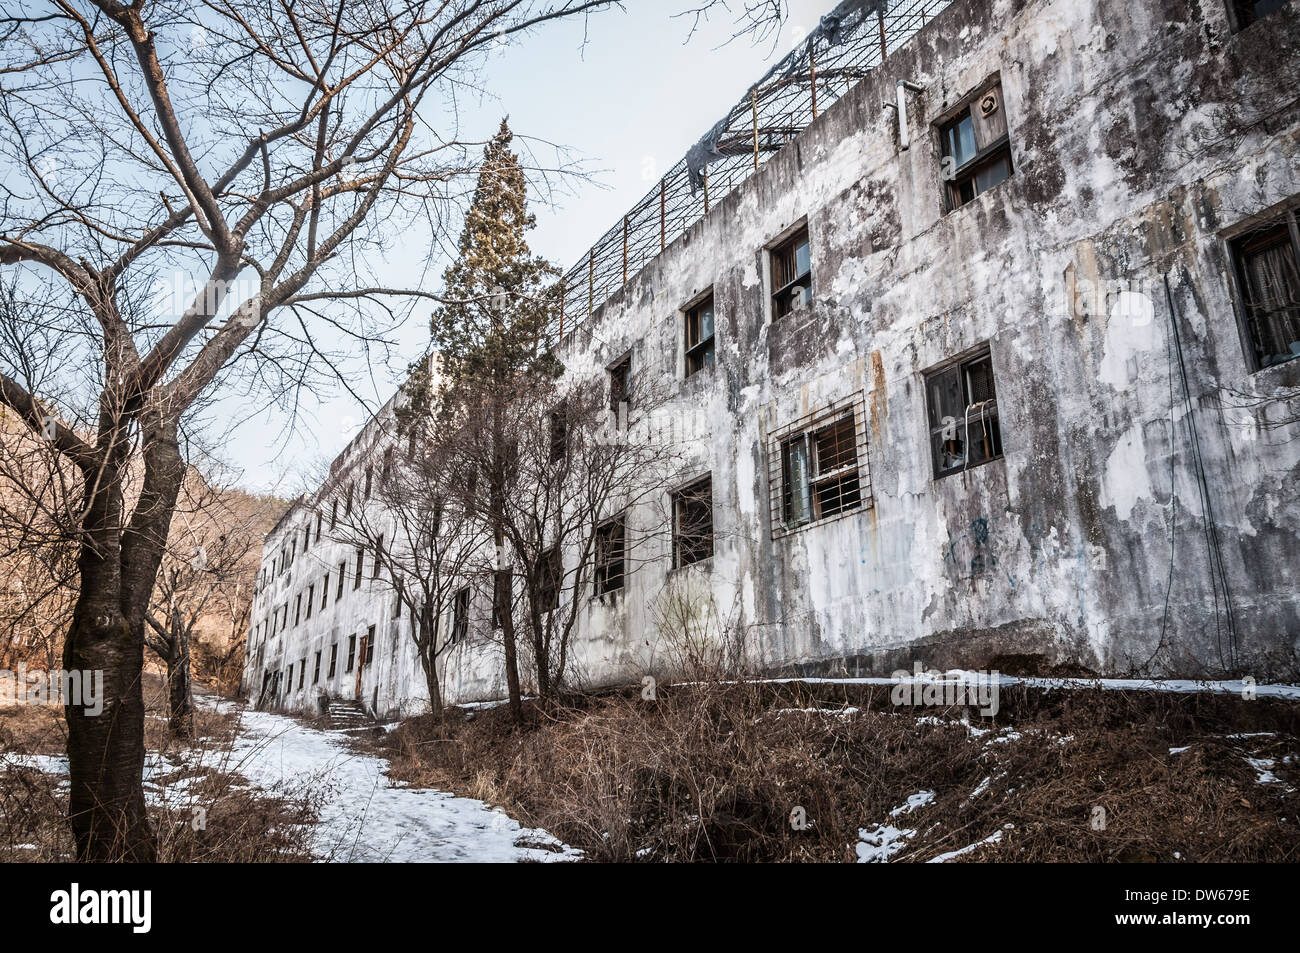 Gonjiam psychiatric hospital in South Korea. The hospital was abandoned nearly twenty years ago. Stock Photo